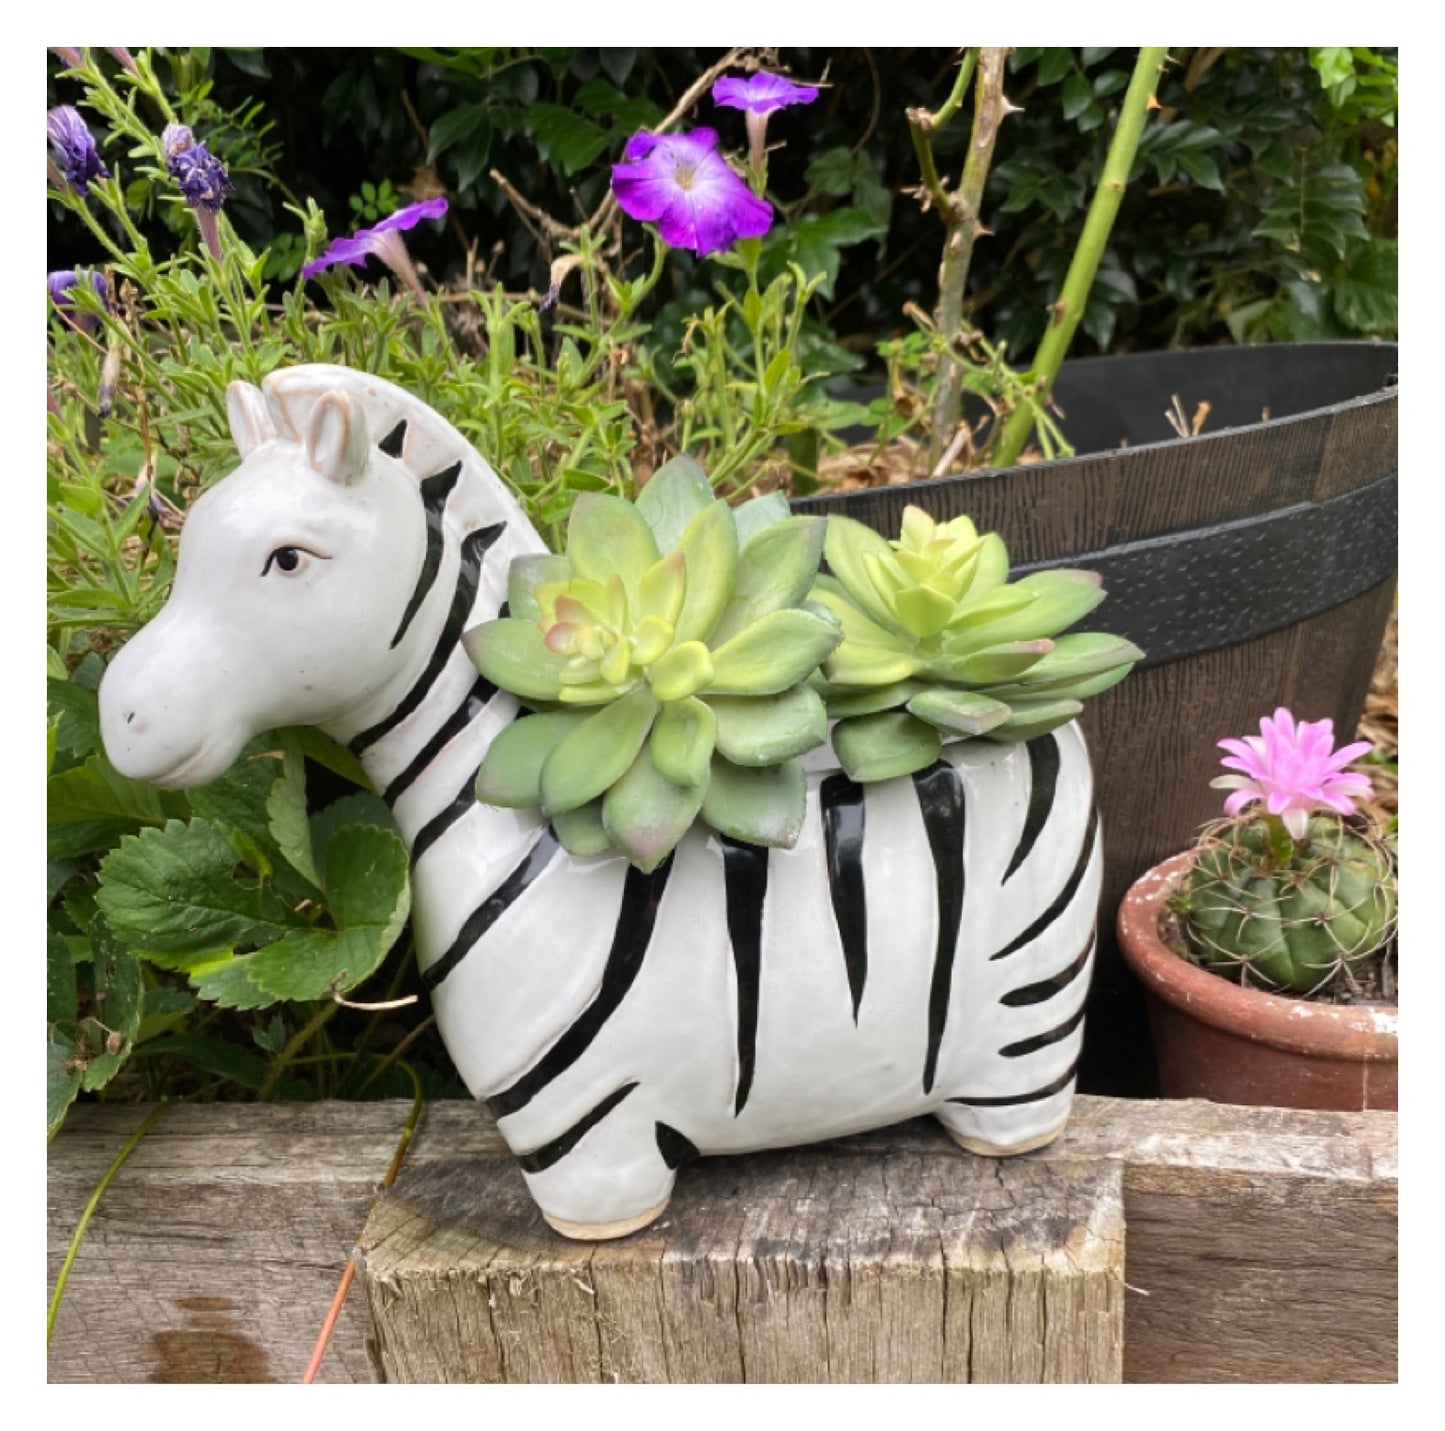 Zebra Leo Plant Pot Planter Garden - The Renmy Store Homewares & Gifts 